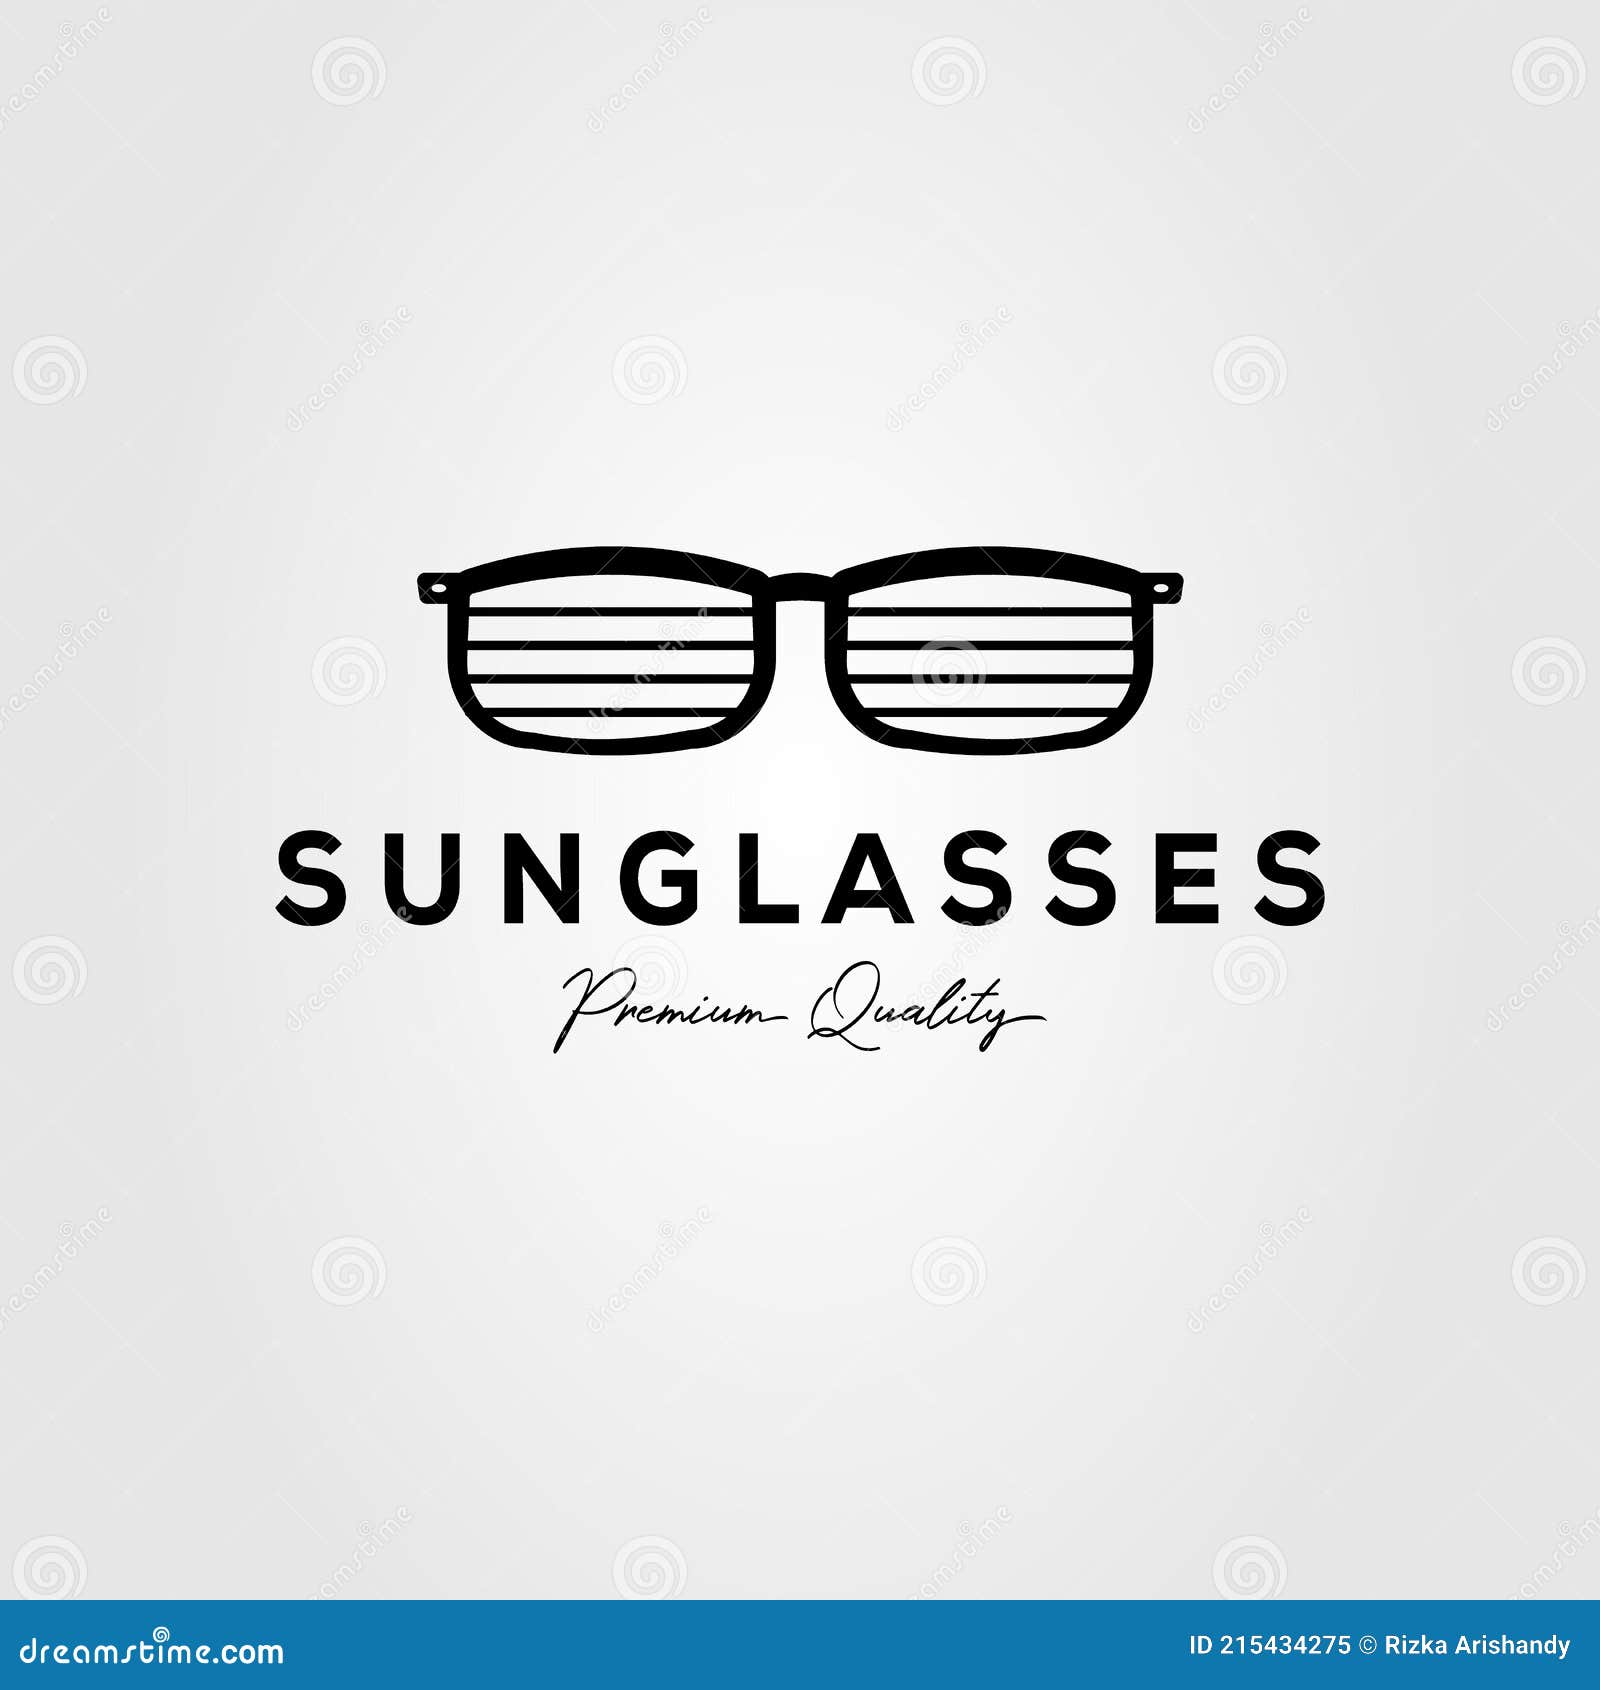 Sunglasses Company Minimalist Isolated Logo Template Vector ...